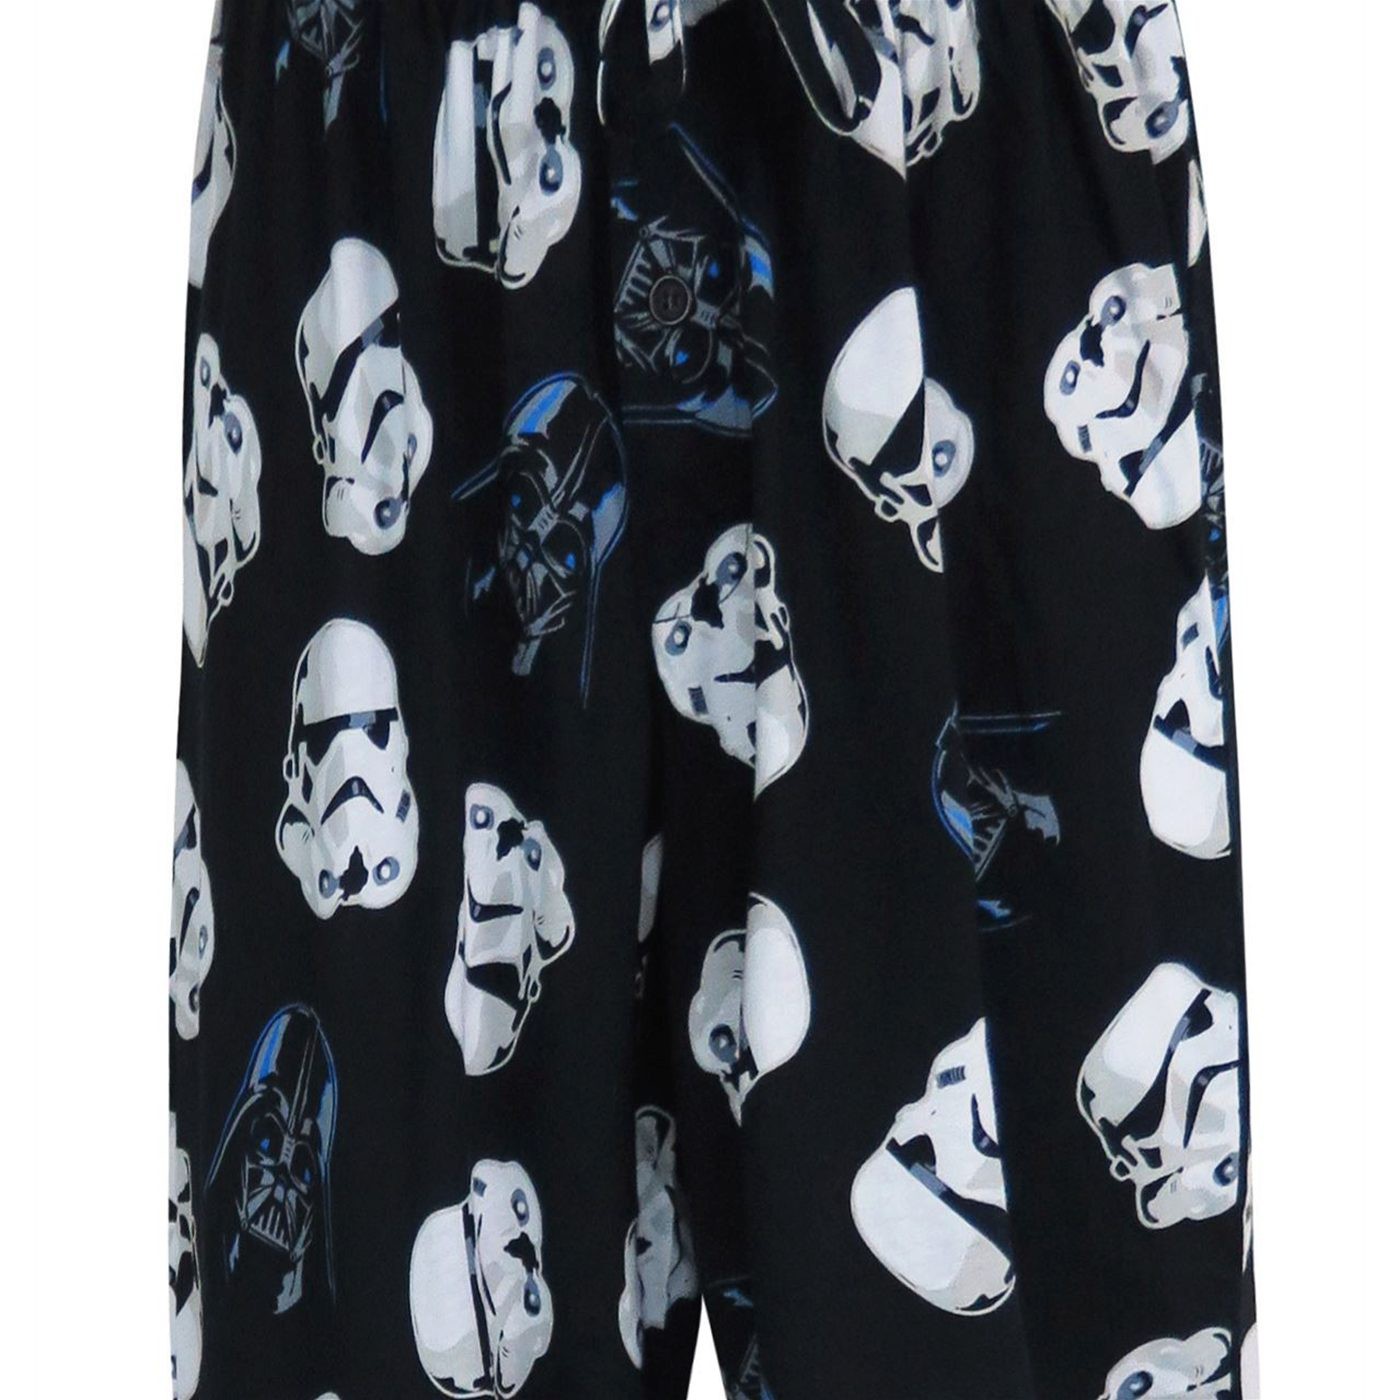 Star Wars Darth Vader & Stormtrooper Pajama Pants